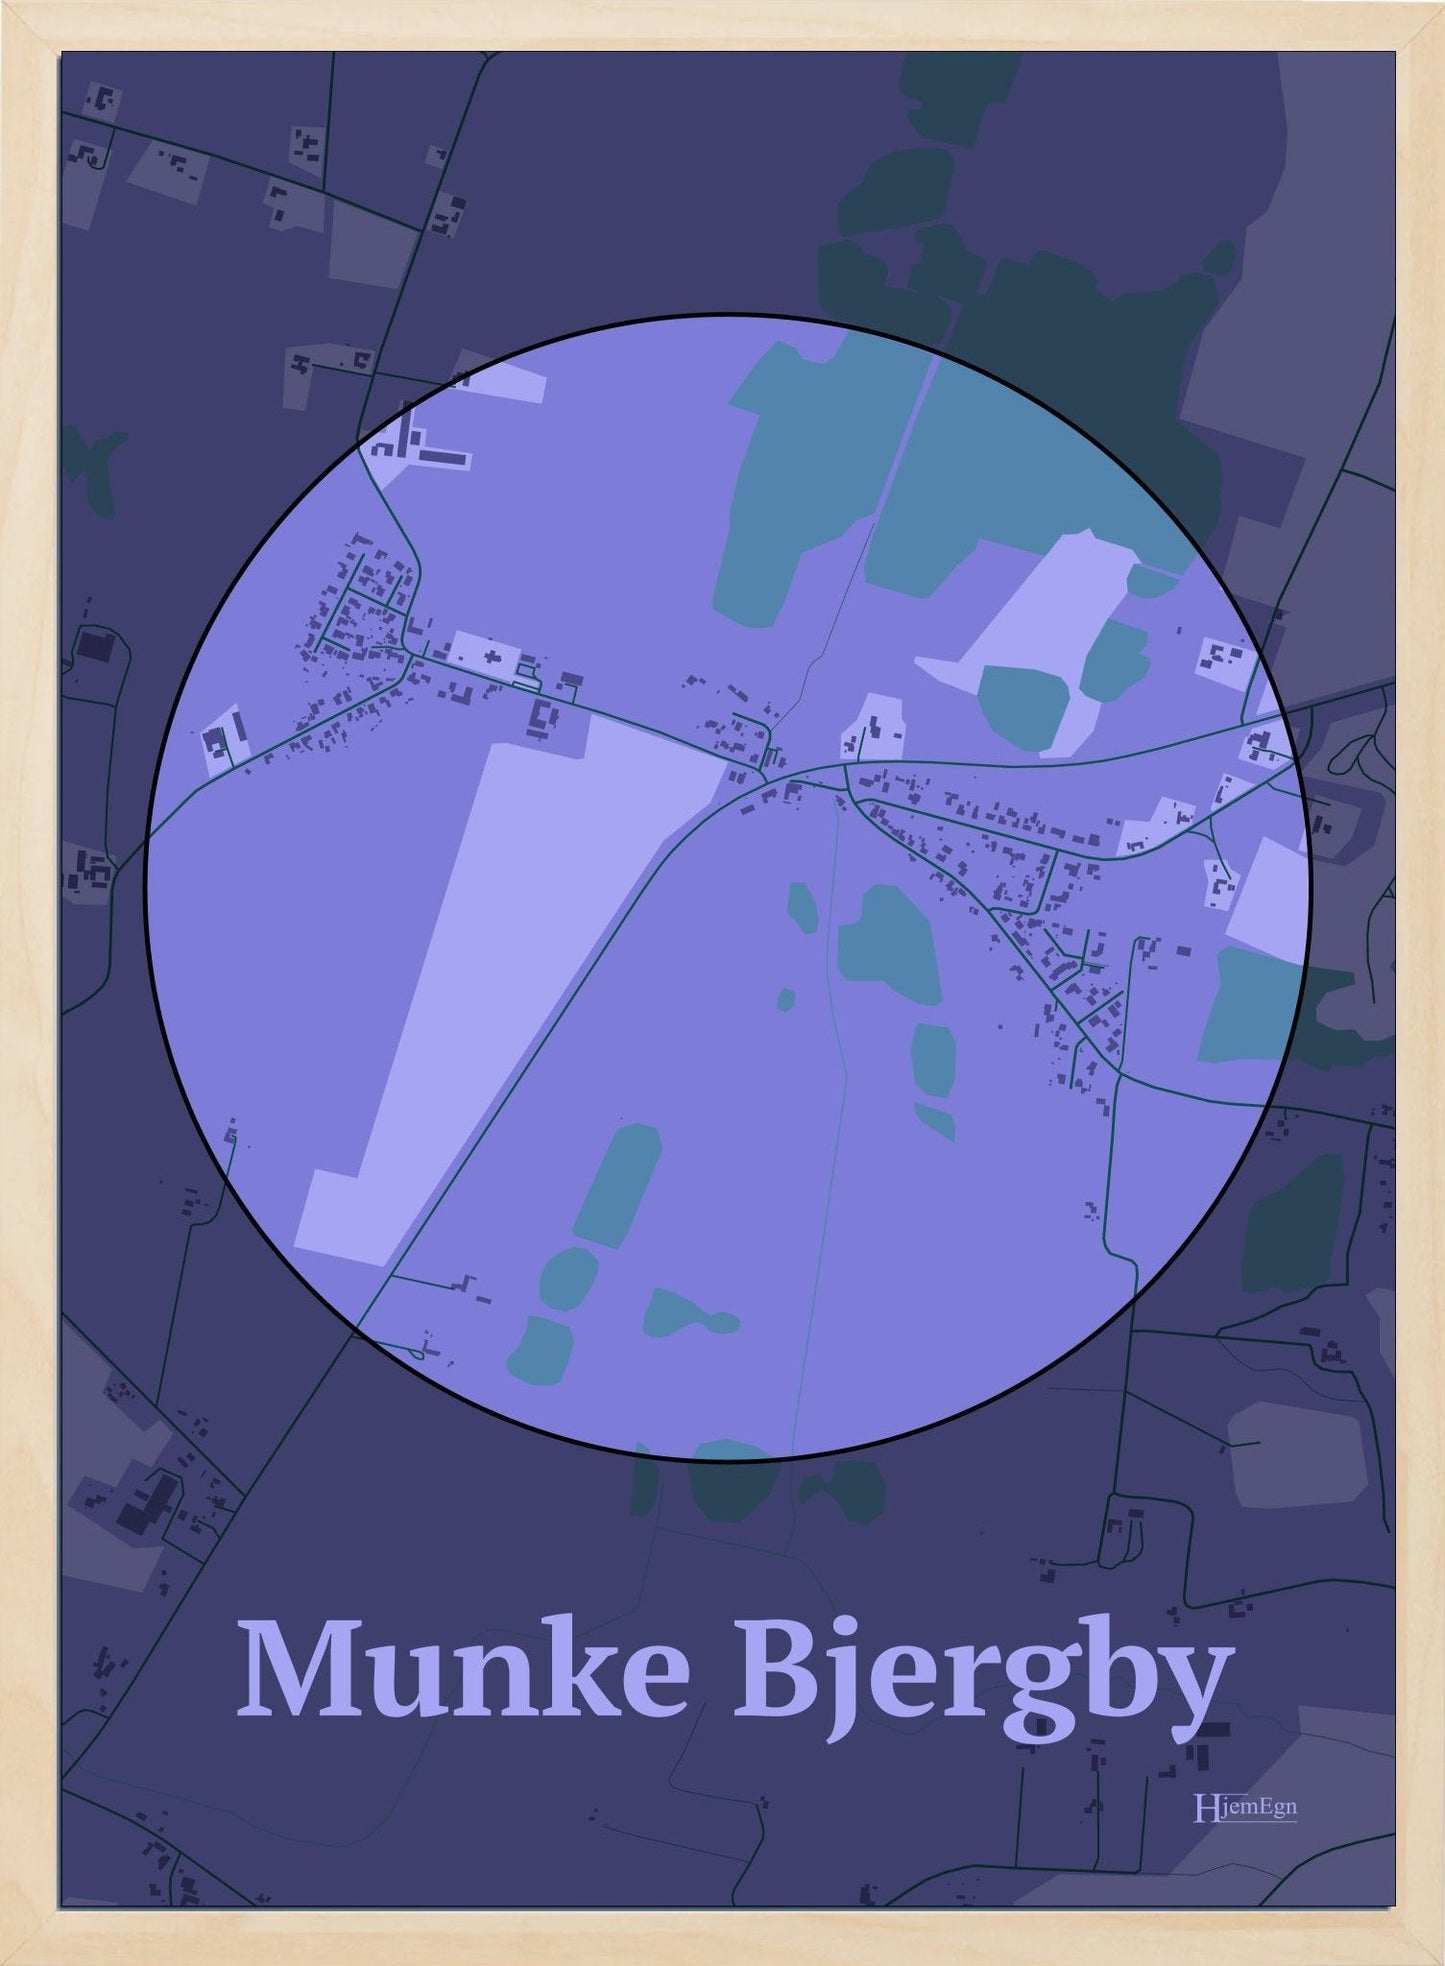 Munke Bjergby plakat i farve pastel lilla og HjemEgn.dk design centrum. Design bykort for Munke Bjergby